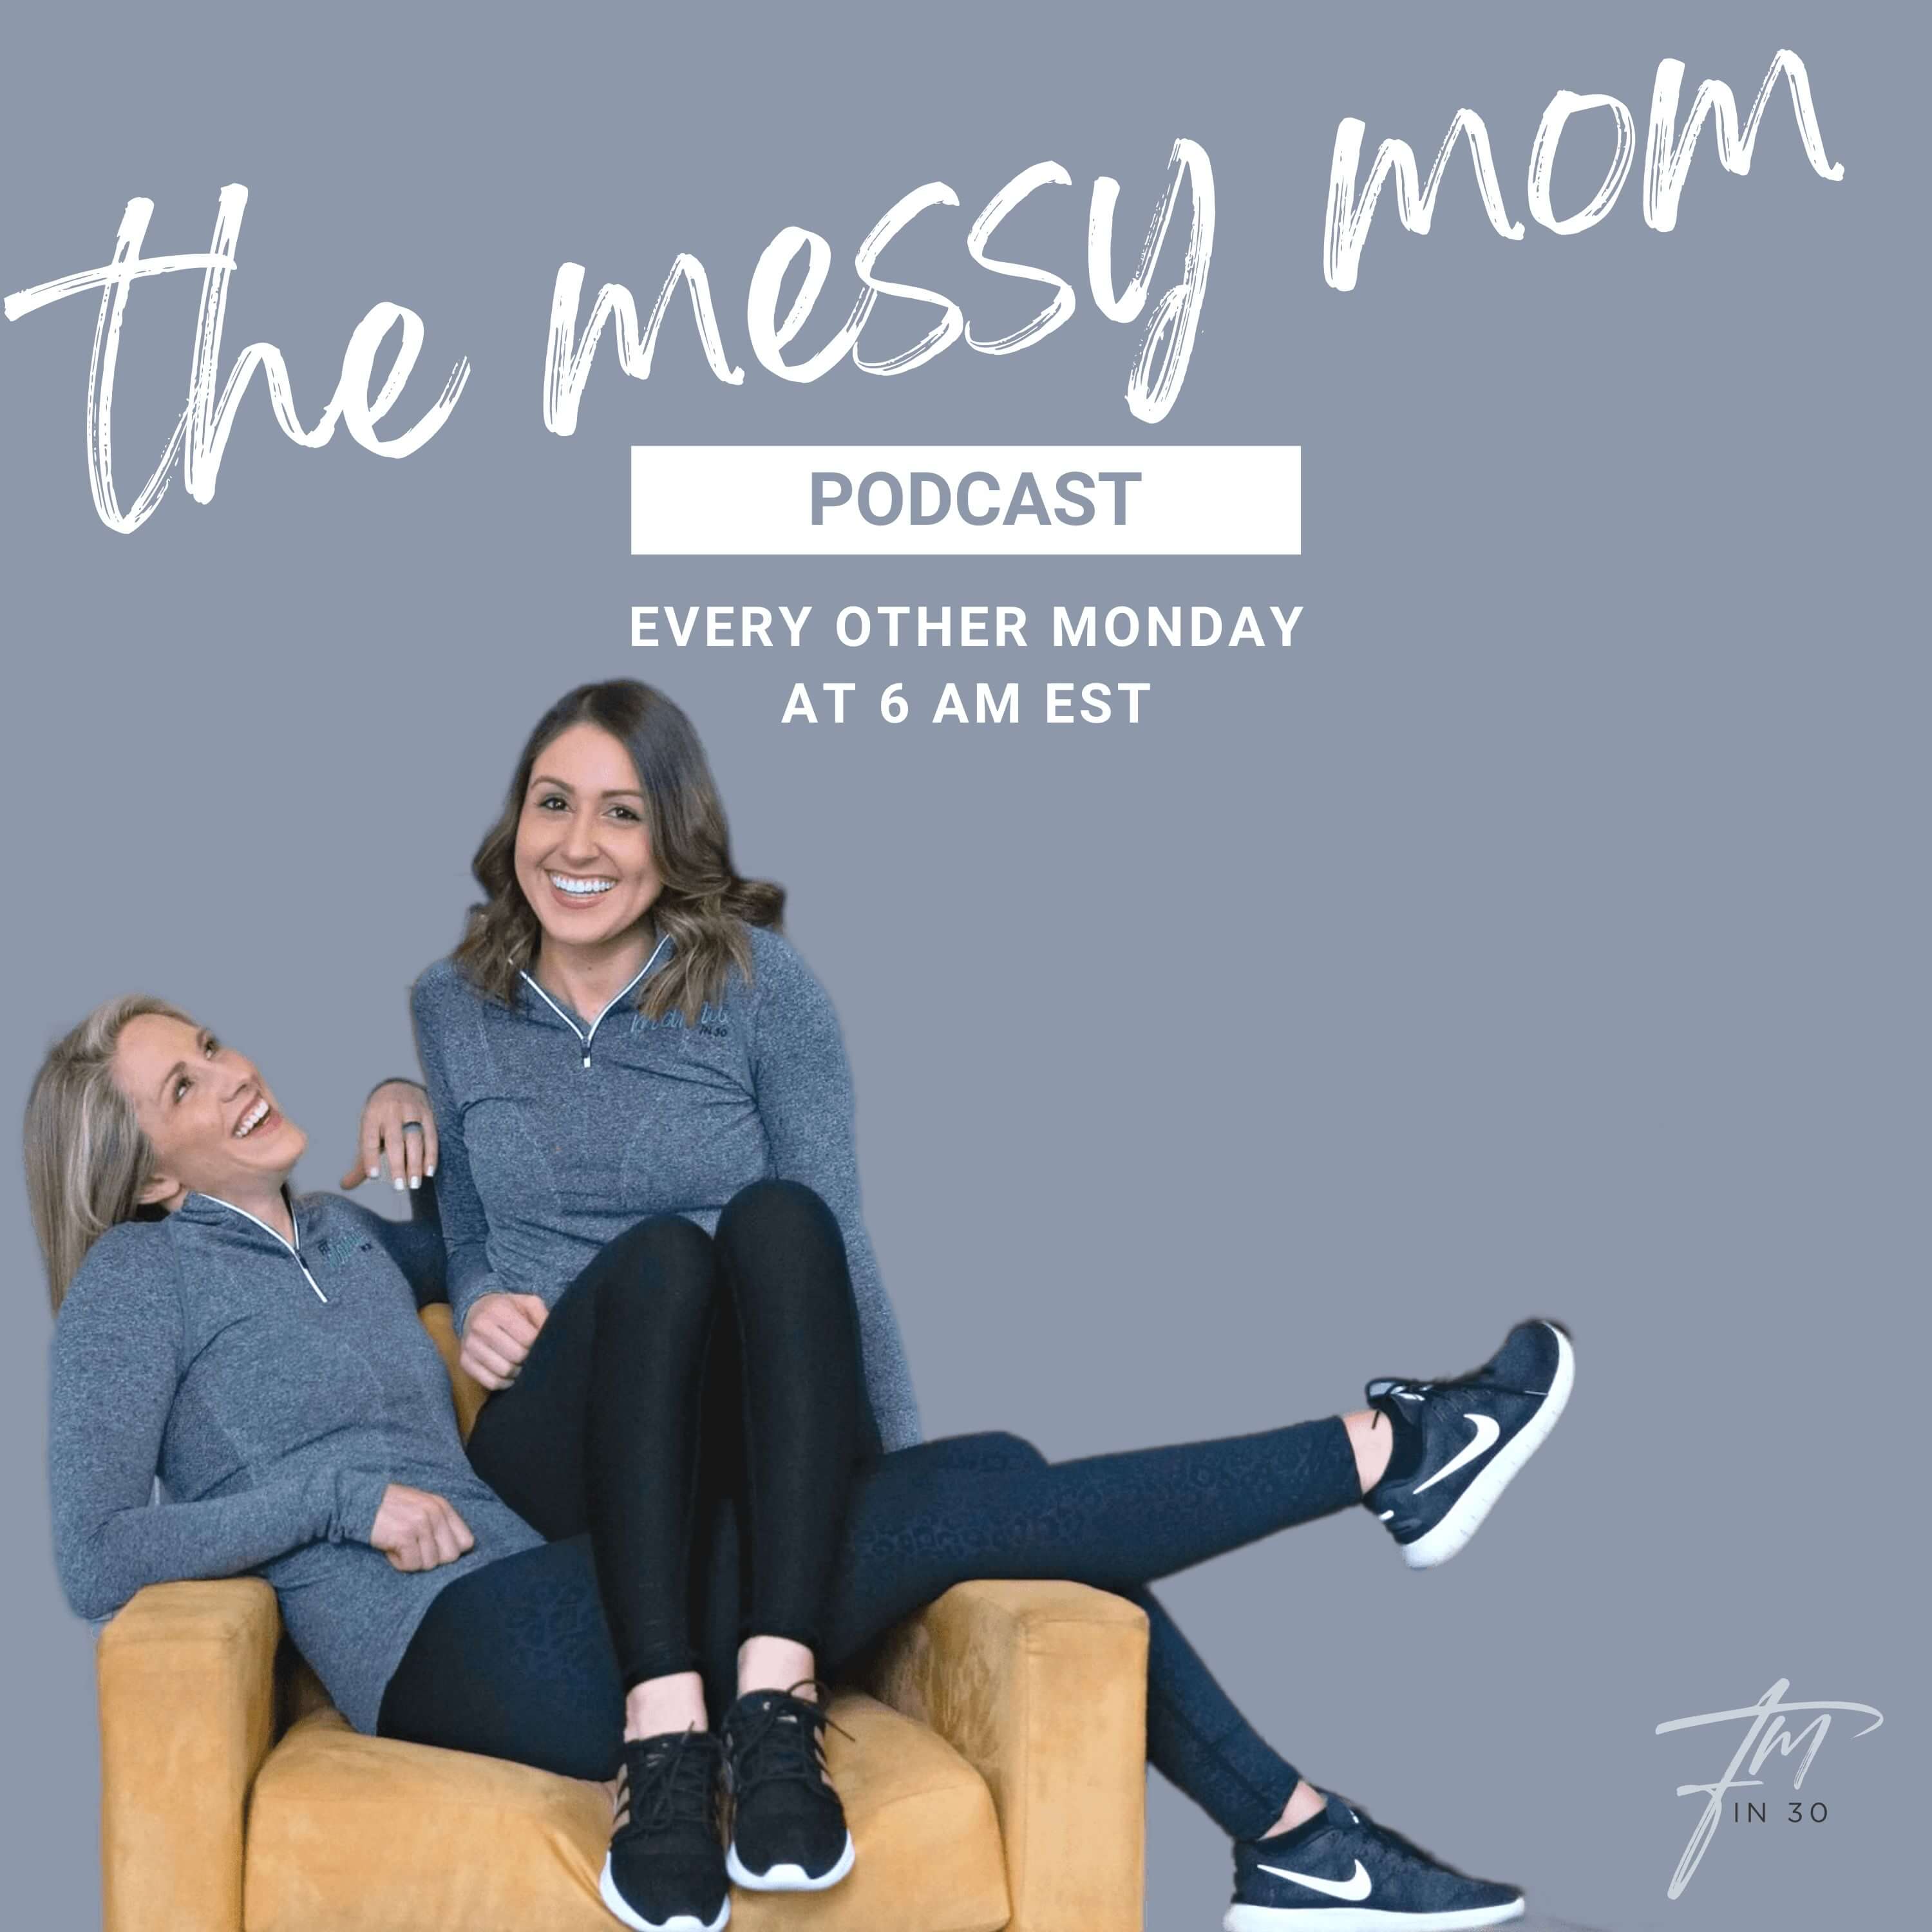 Artwork for podcast The Messy Mom Podcast